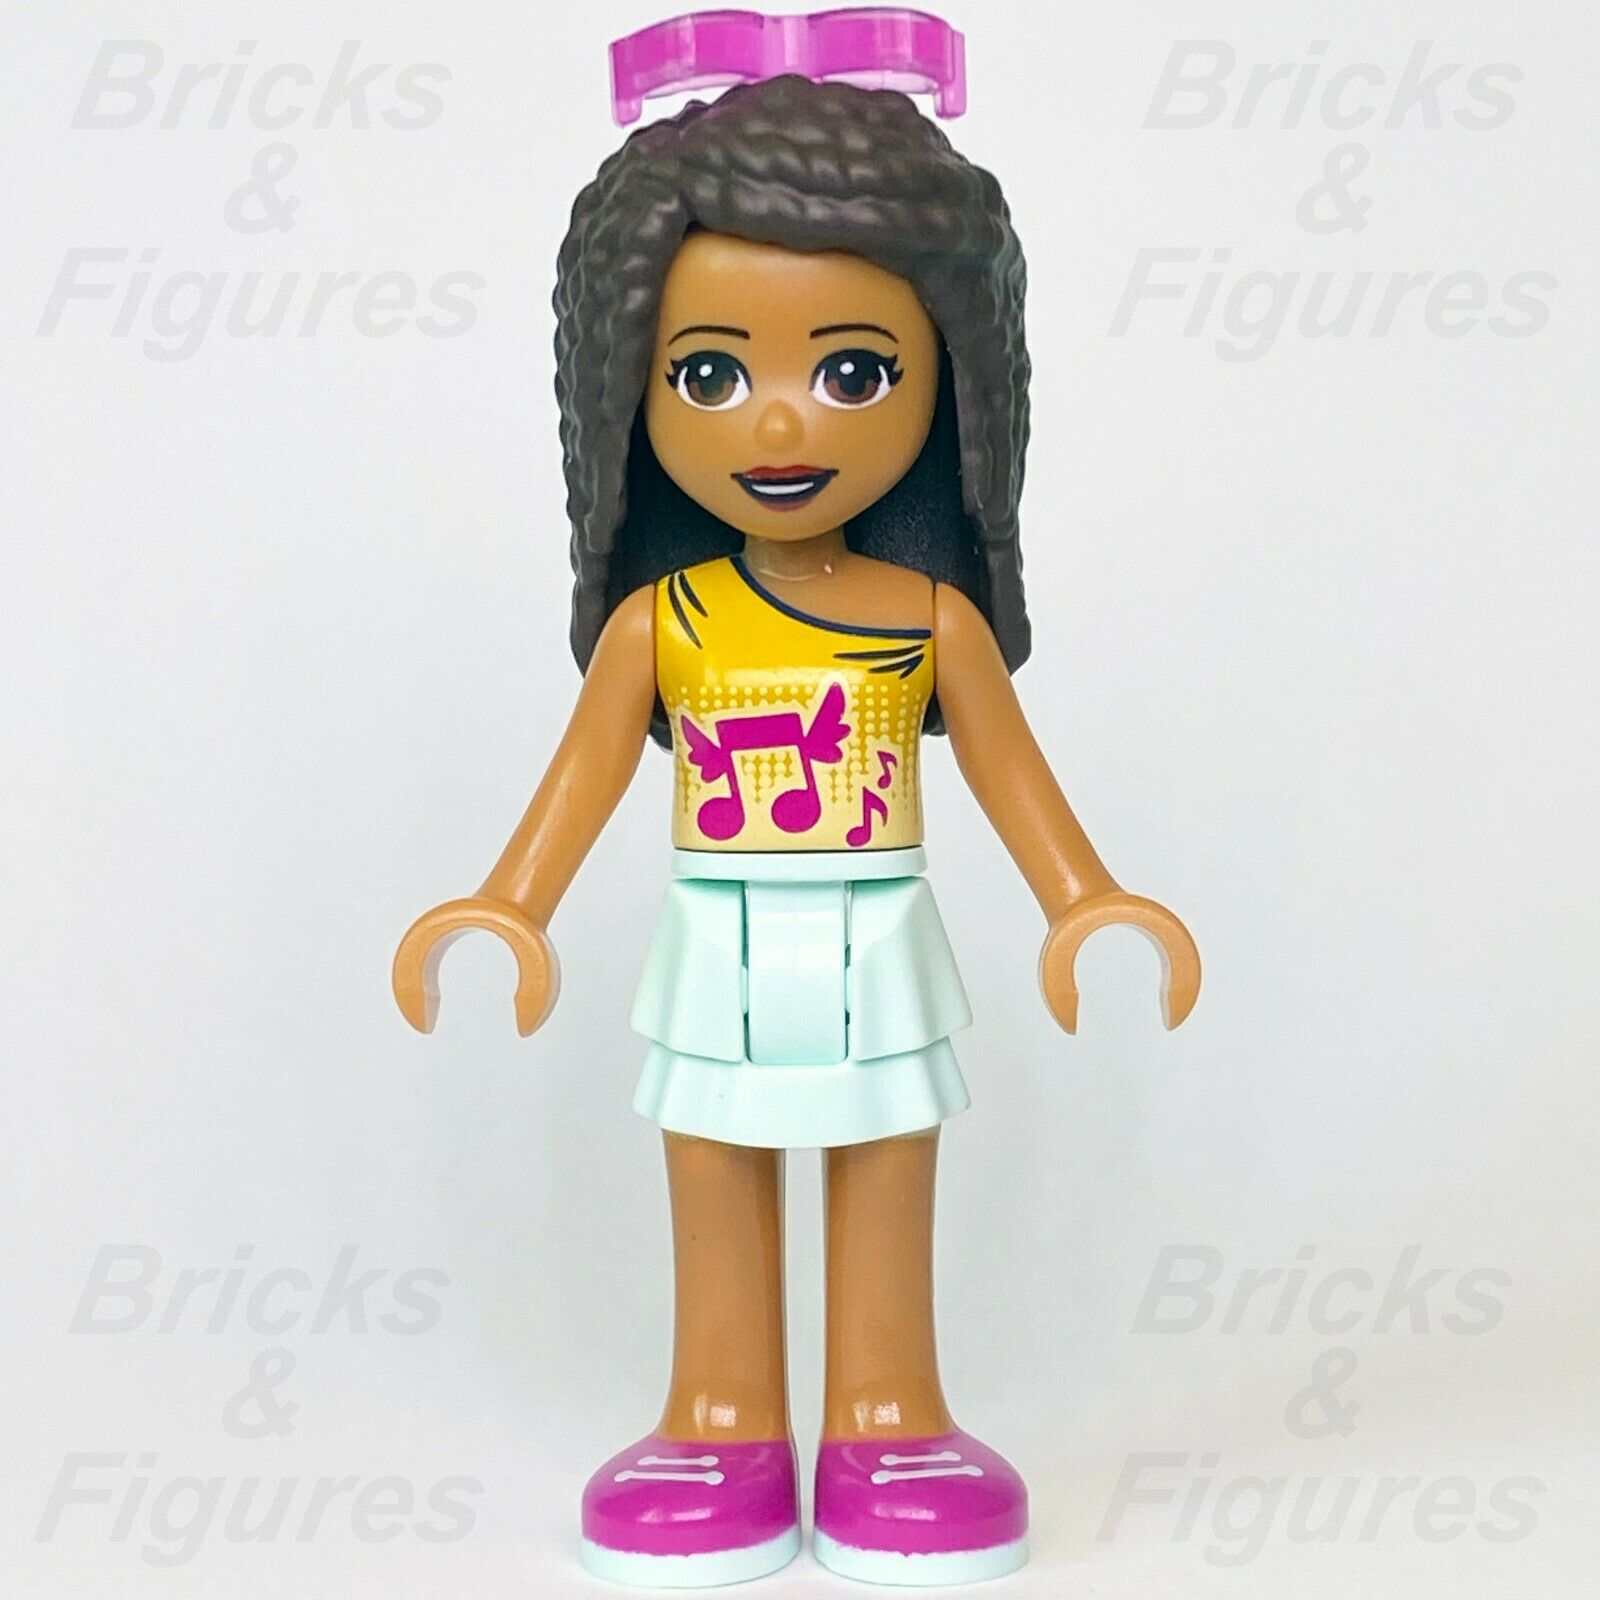 Friends LEGO Andrea Singer Costume Designer with Pink Sunglasses Minifig 41354 - Bricks & Figures